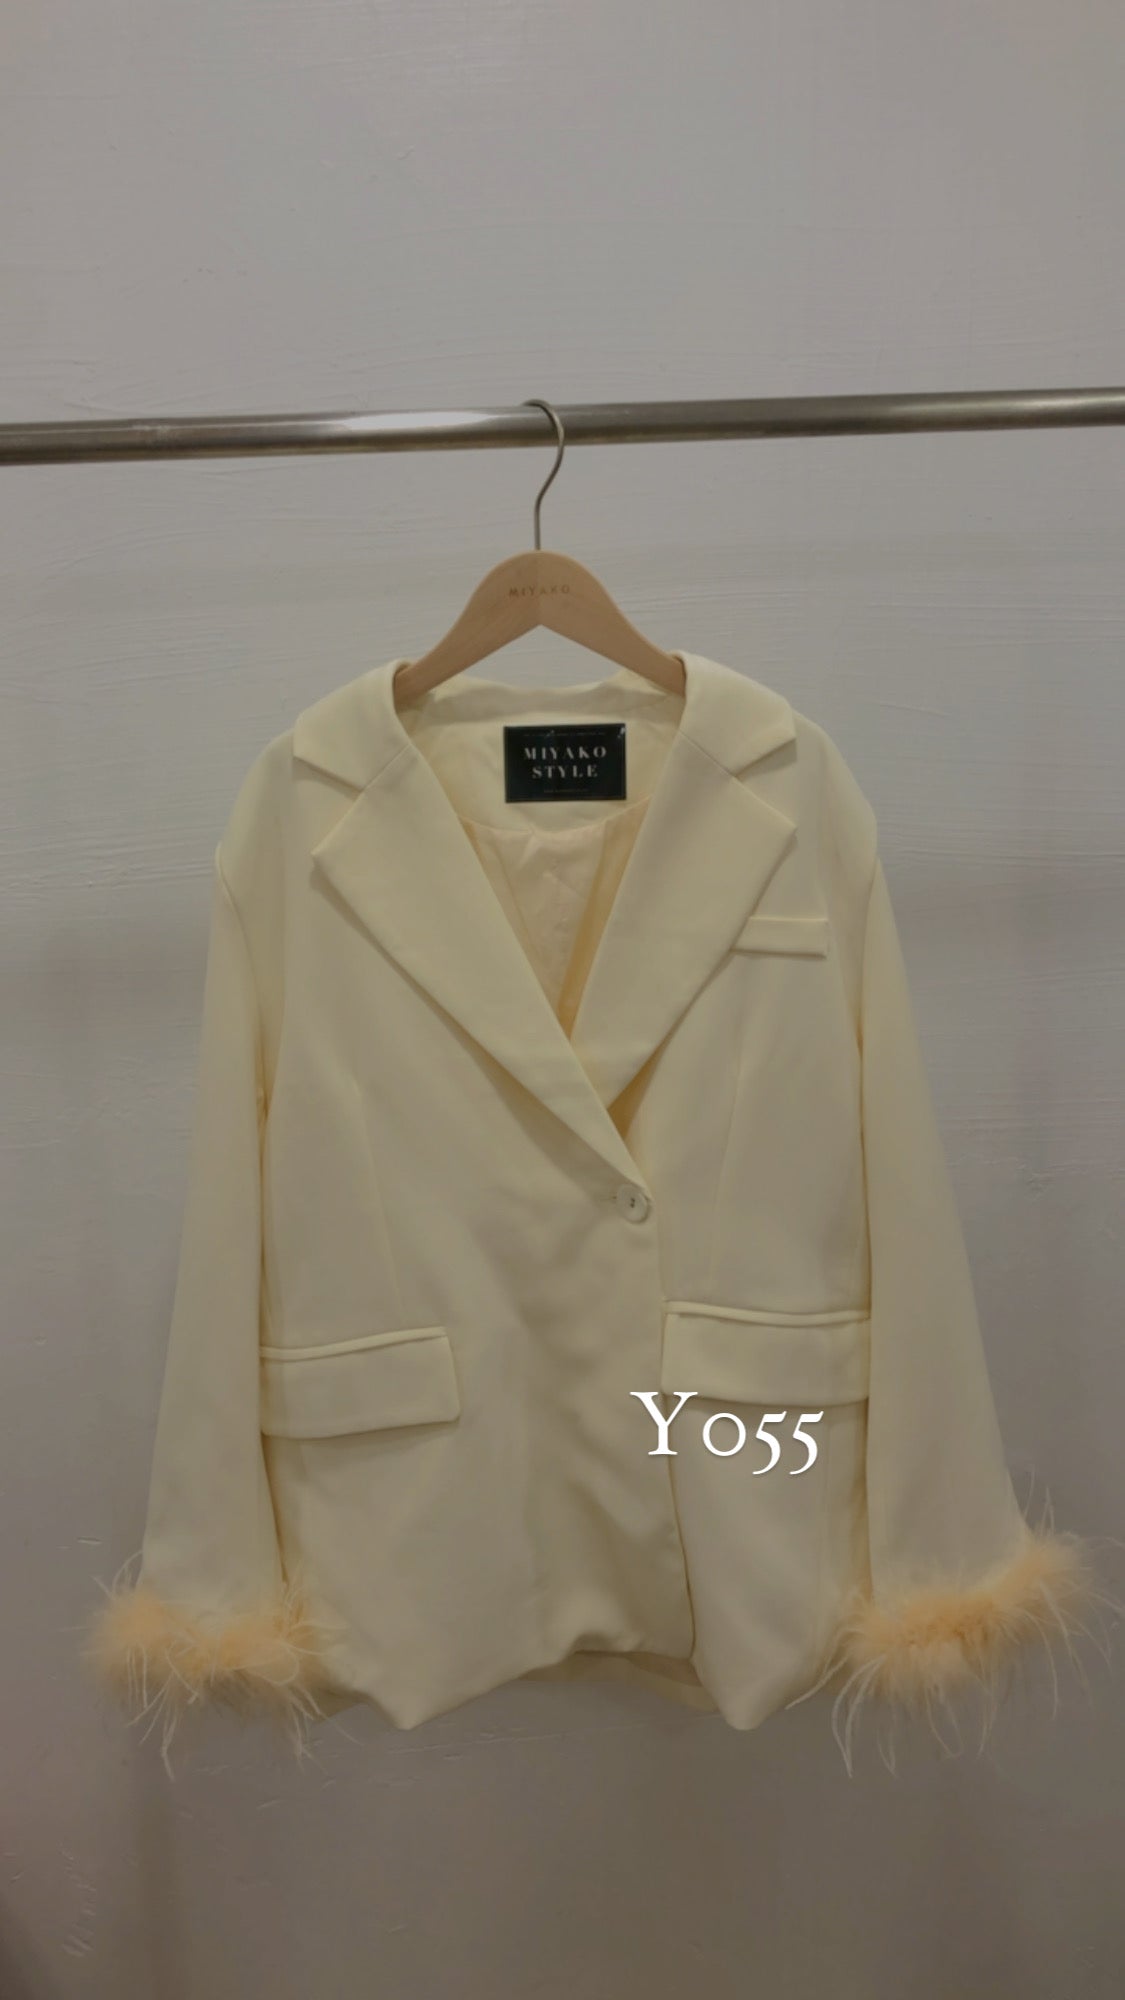 Y055 Fur Long Sleeve Blazer in Beige